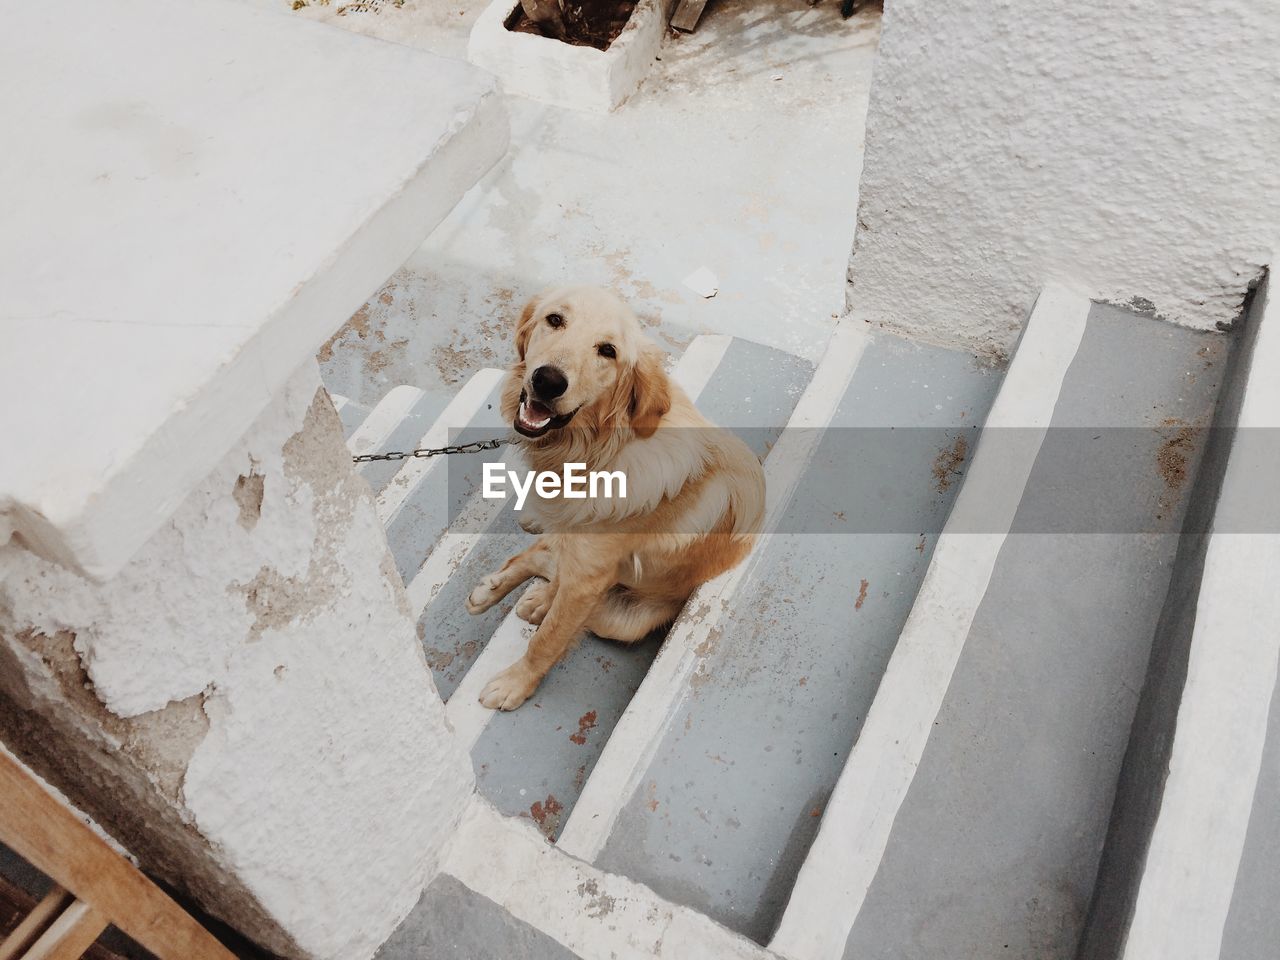 Golden retriever dog sitting on steps